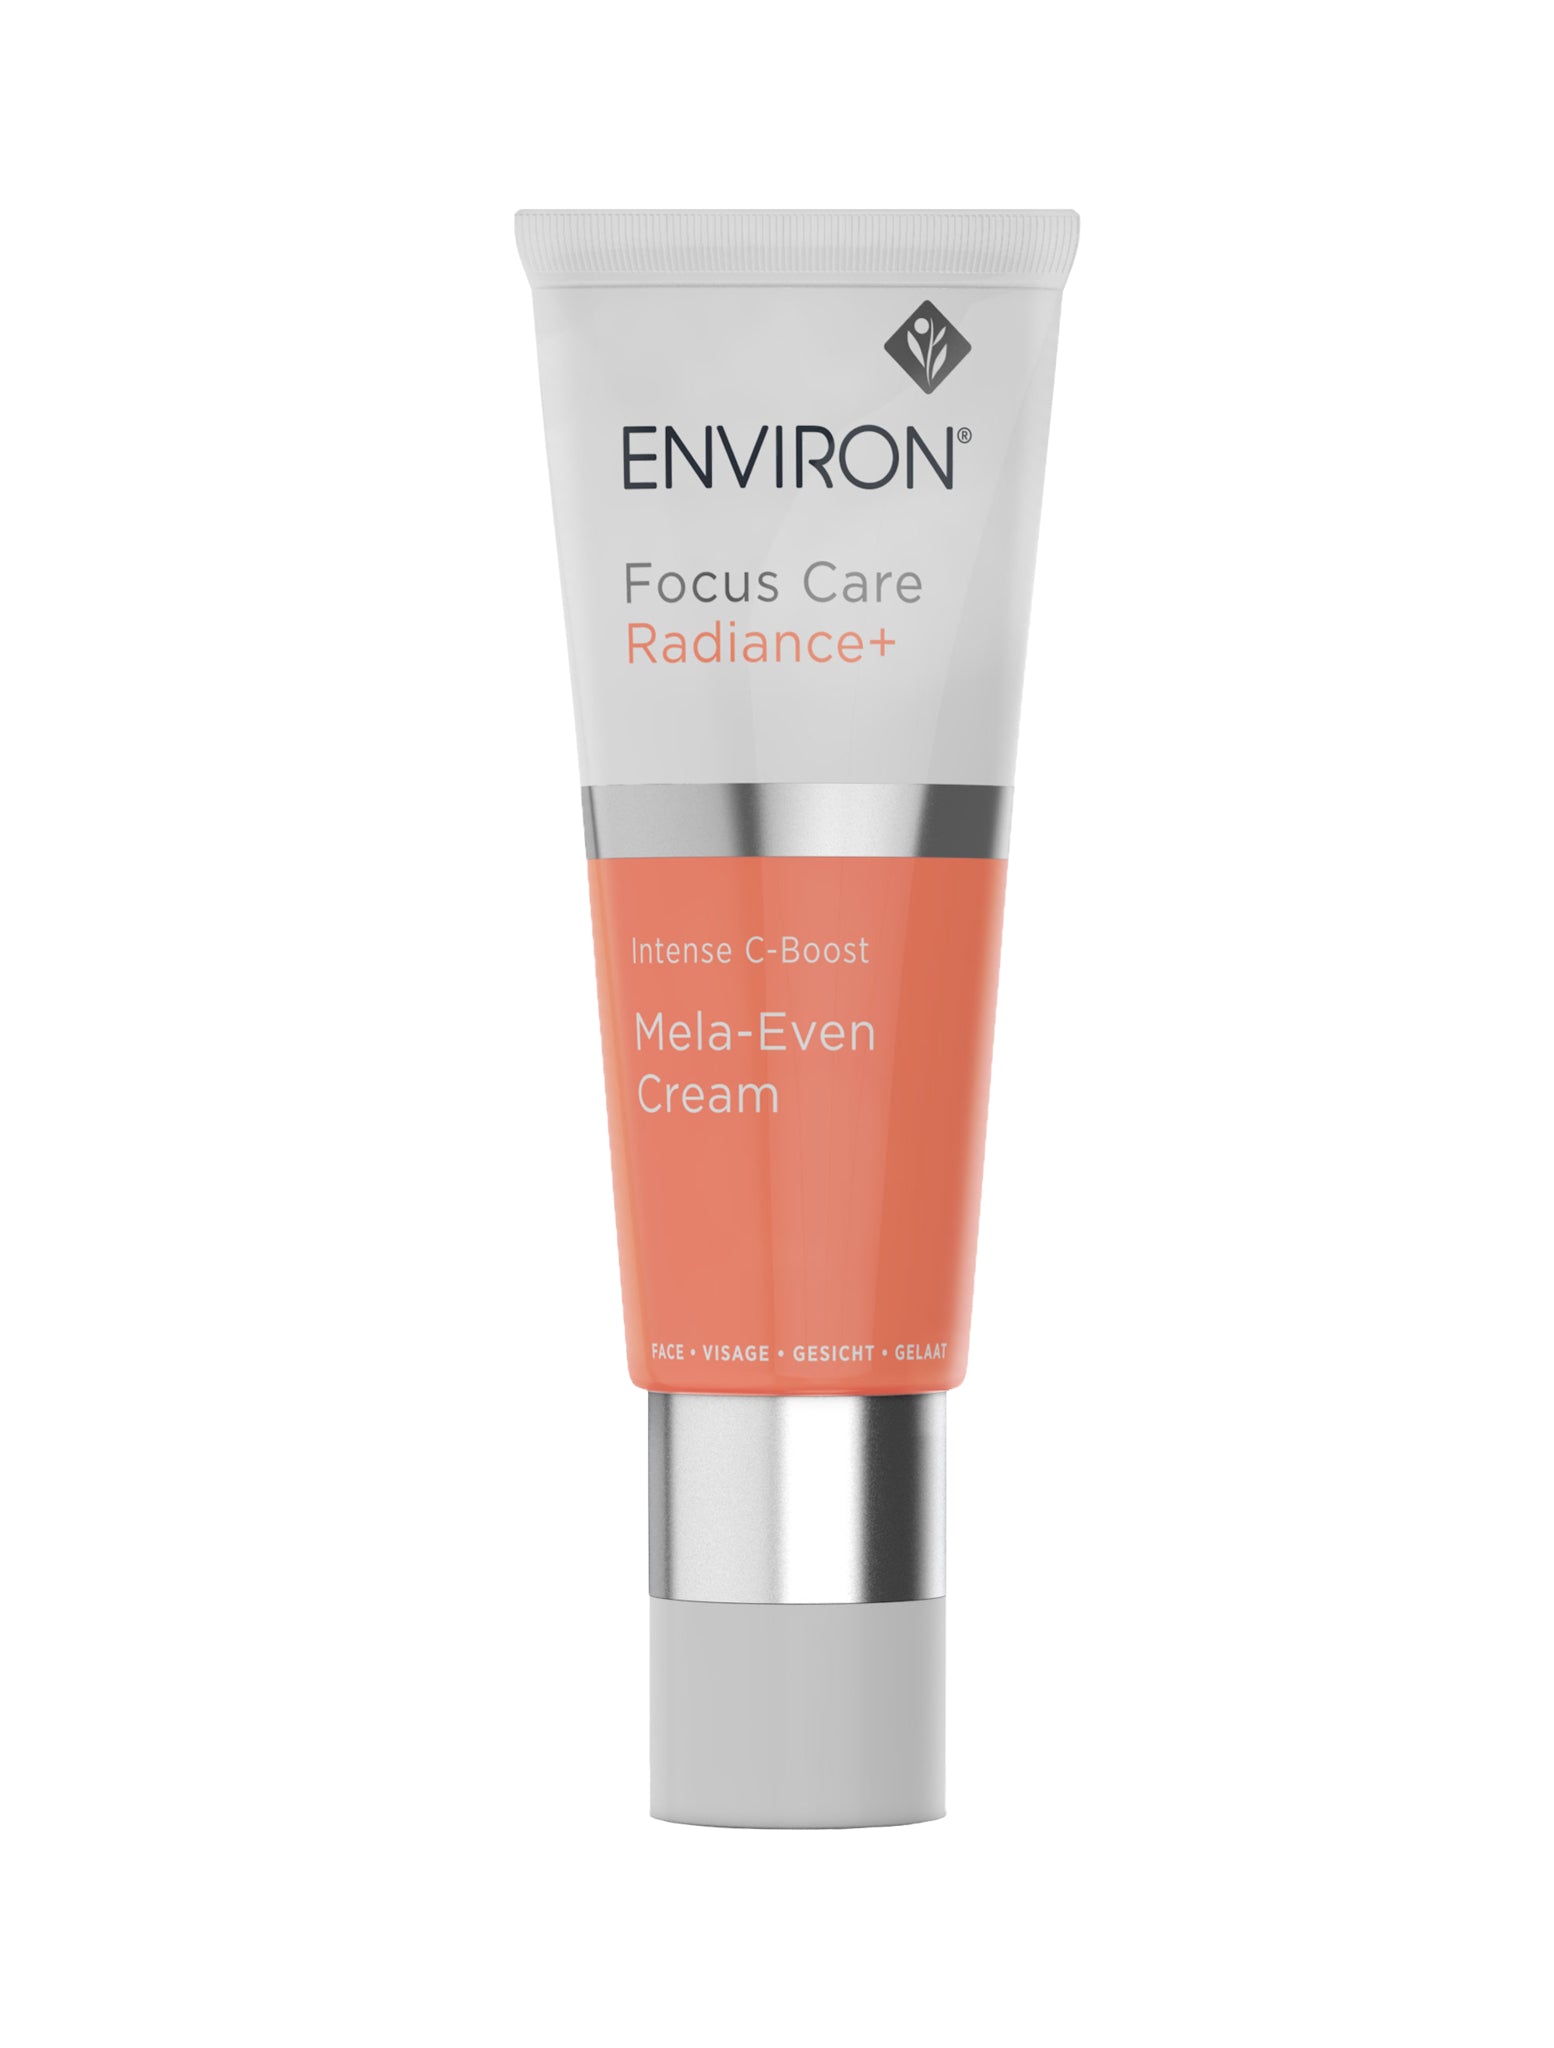 Environ Focus Care™ Radiance+ range - Intense C-Boost Mela-Even Cream 